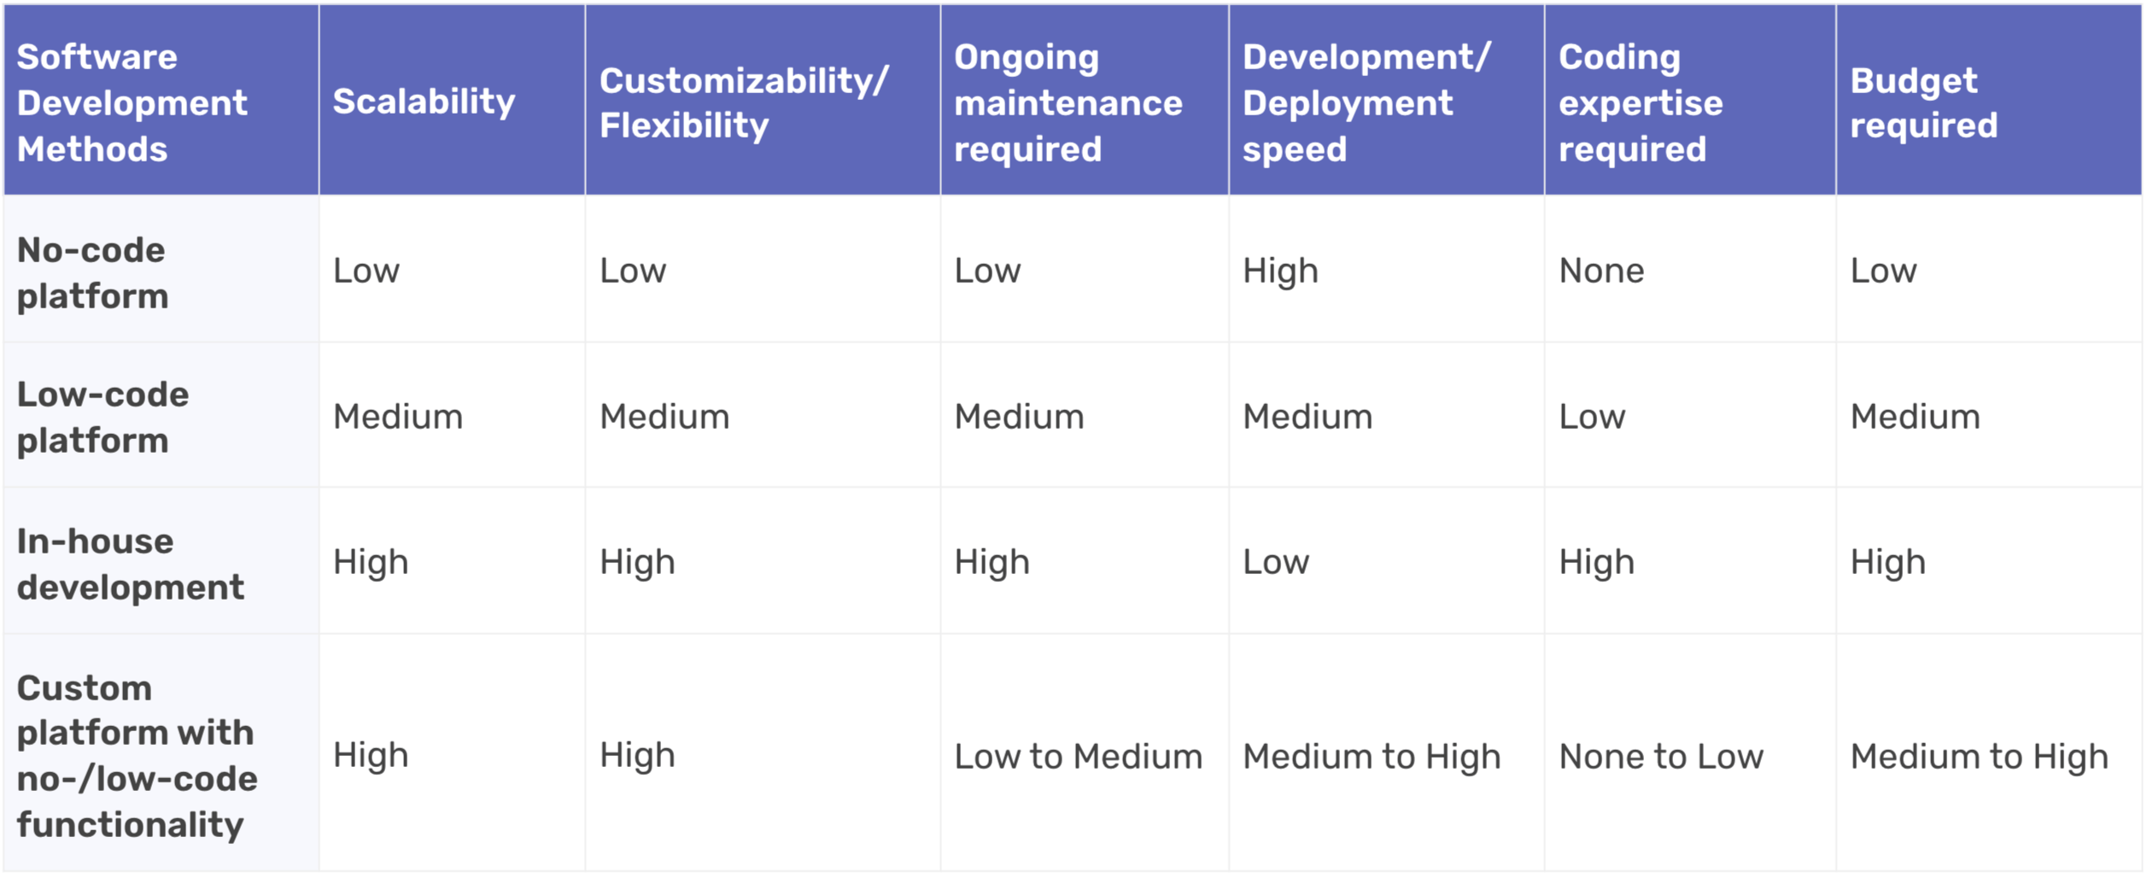 Software Development Methods Chart